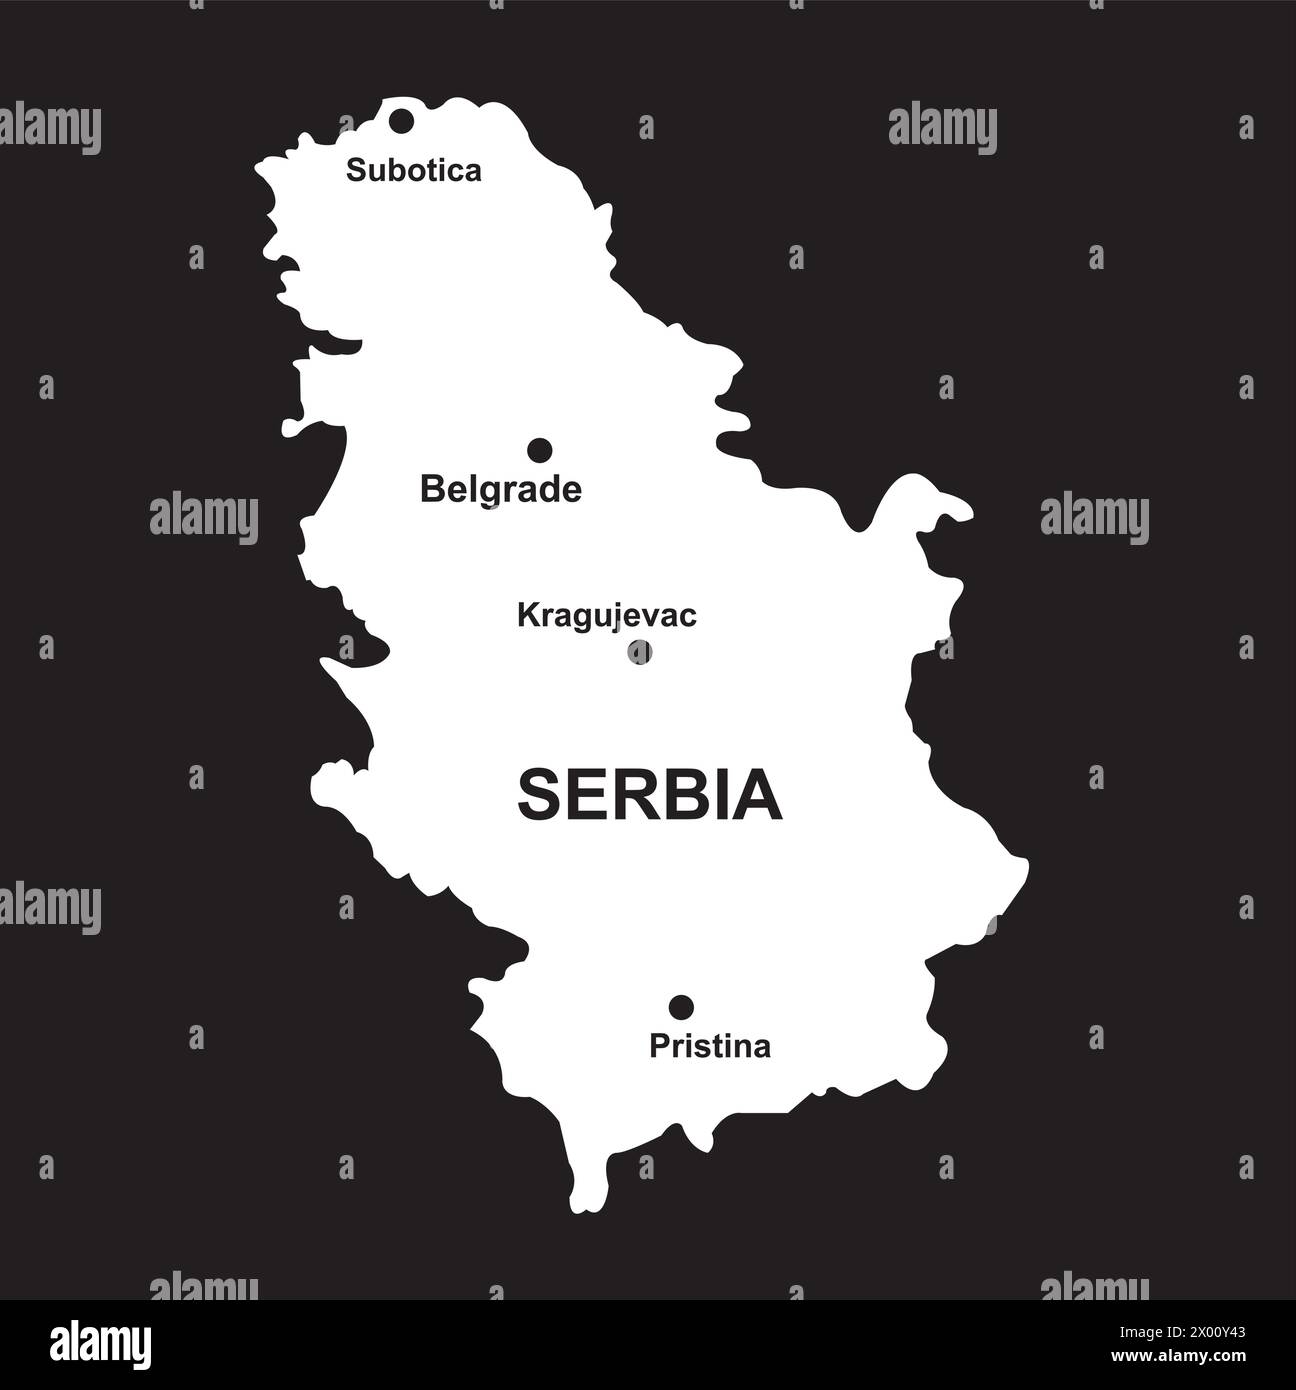 Serbia country map icon vector illustratin simple design Stock Vector